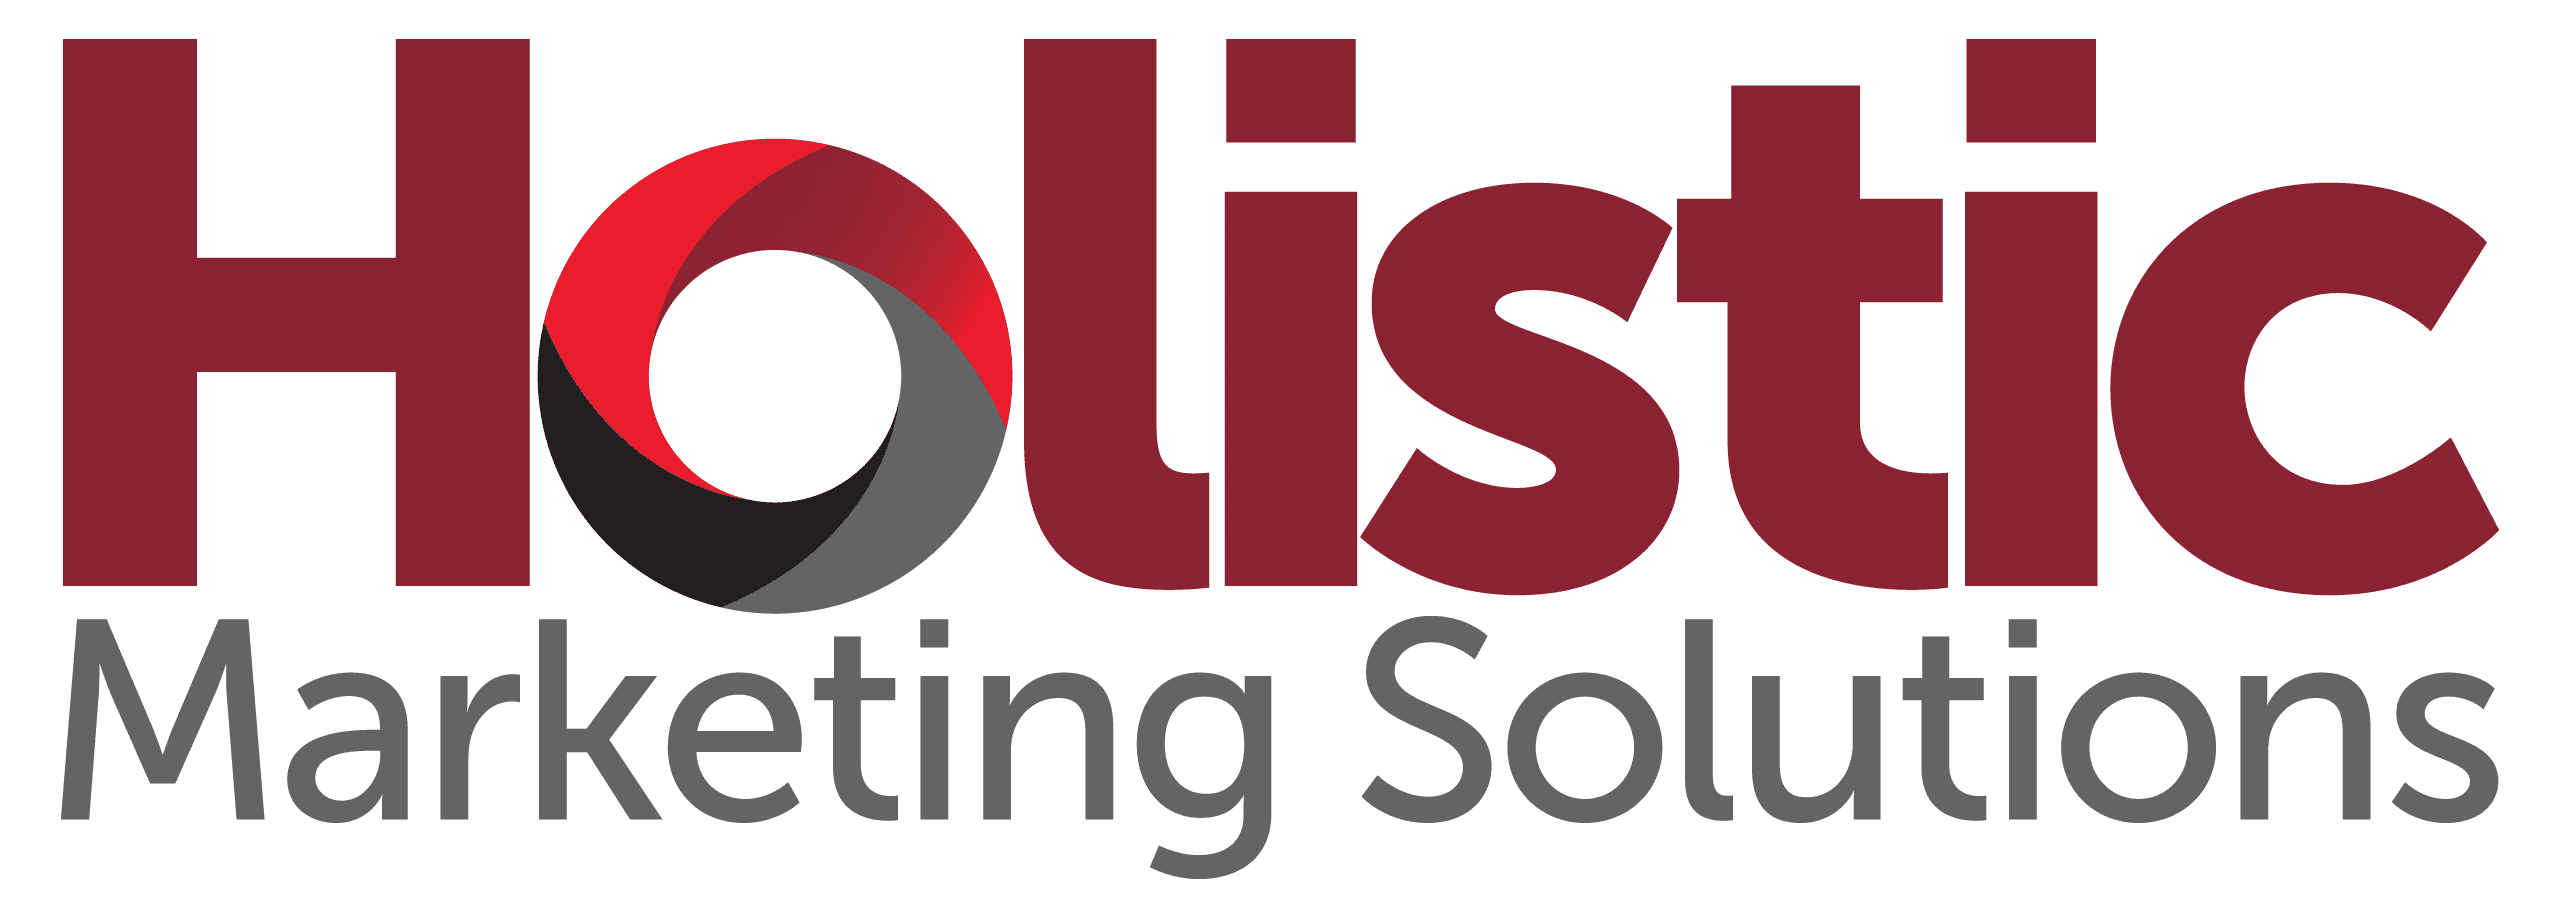 Holistic Marketing Solutions